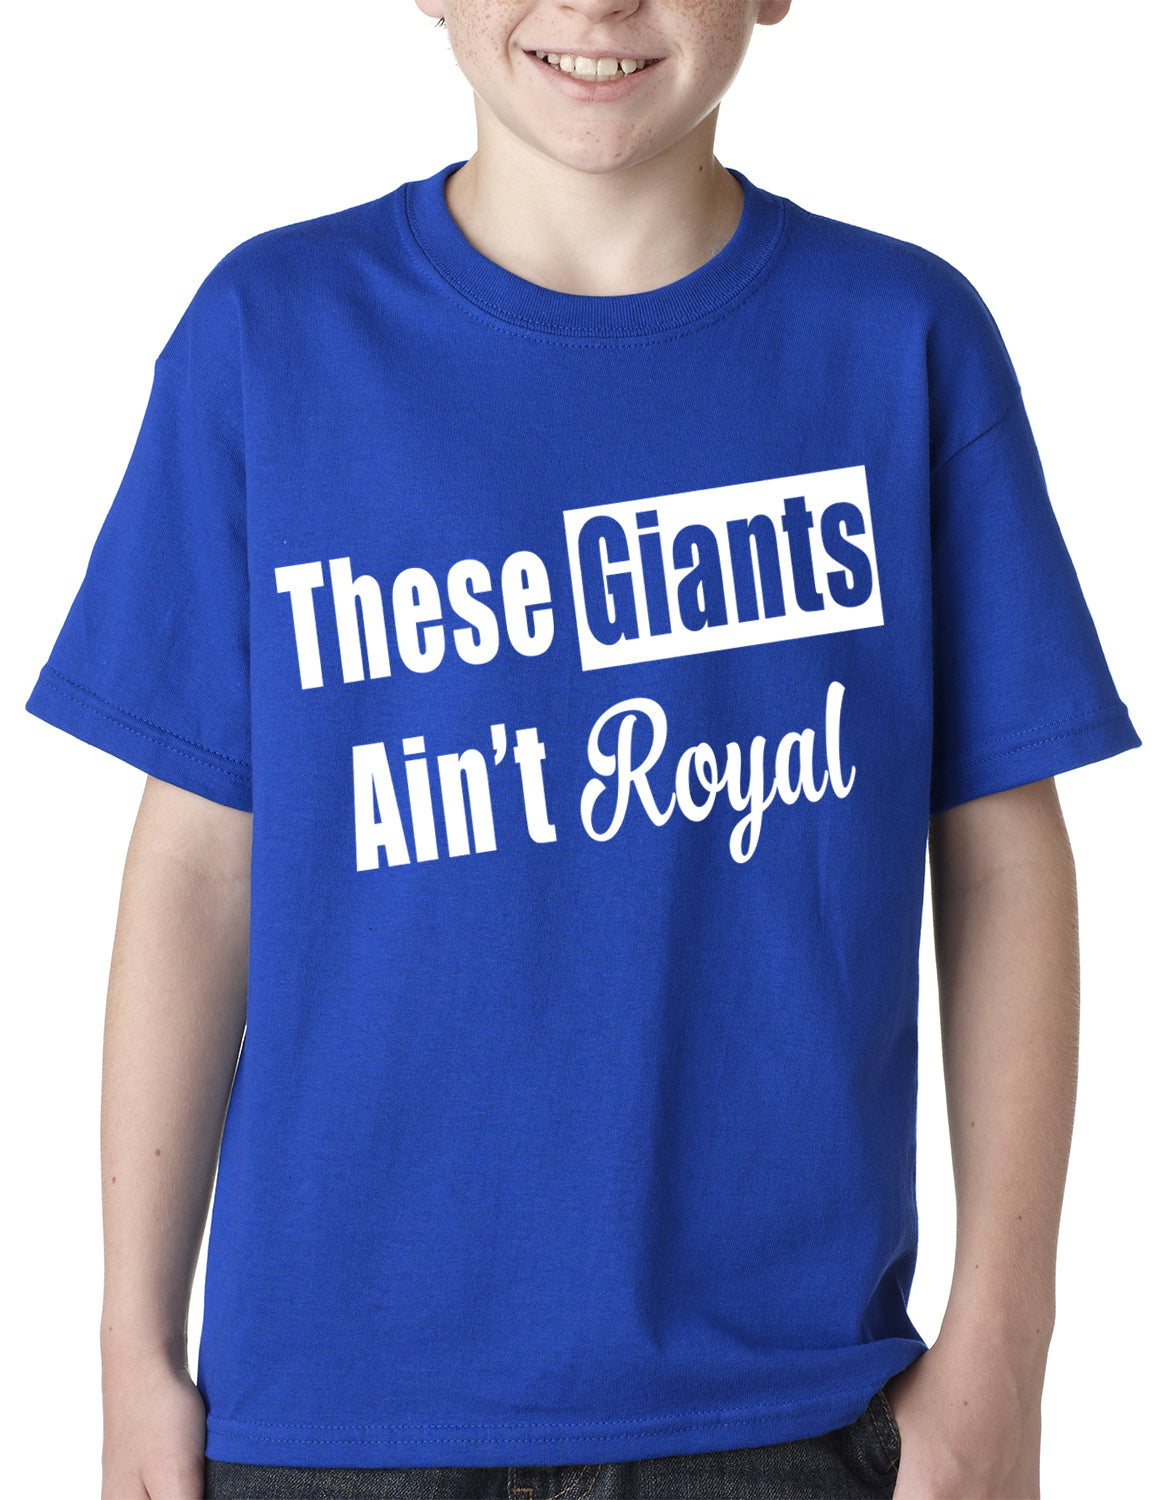 kids giants shirt